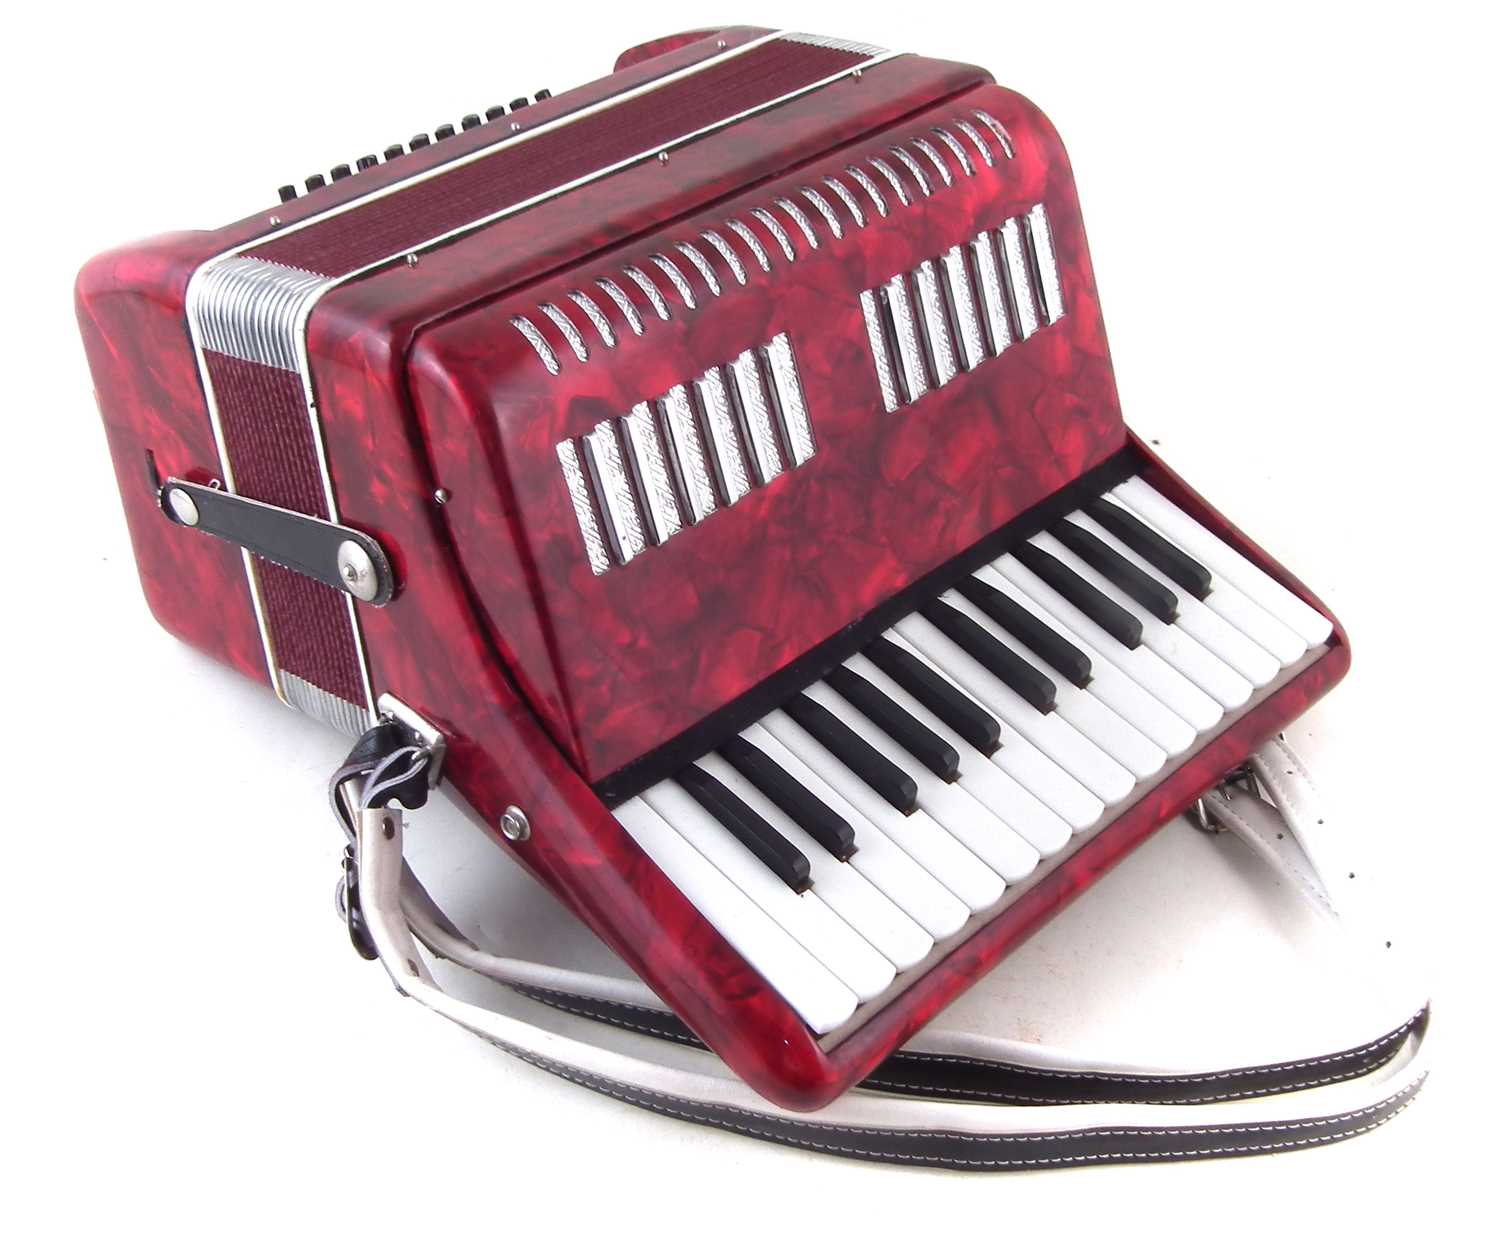 Lot 47 - Unnamed piano accordion in case.